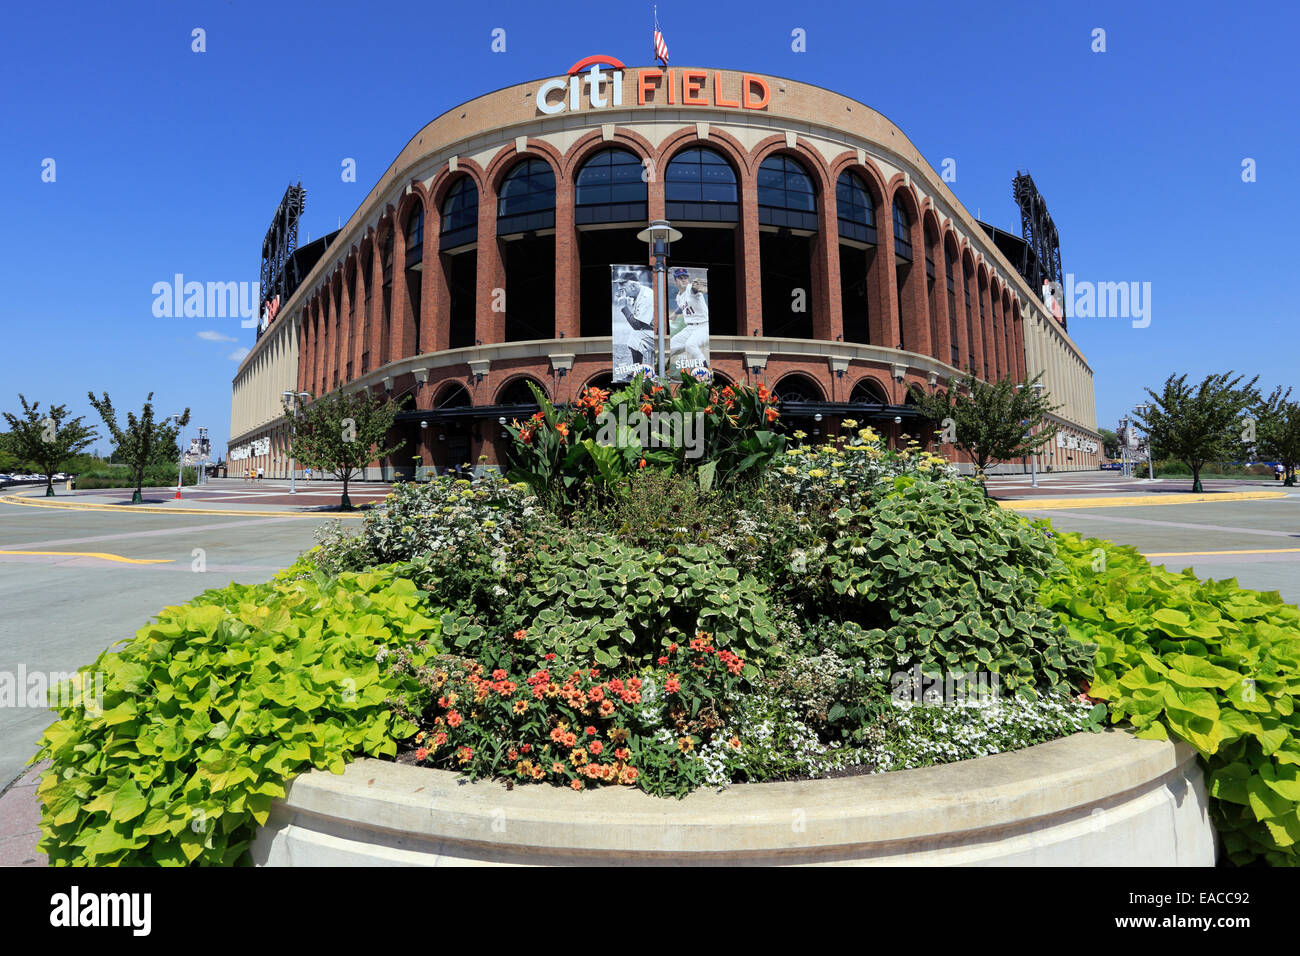 Citi Field stadium home of the New York Mets baseball team Stock Photo